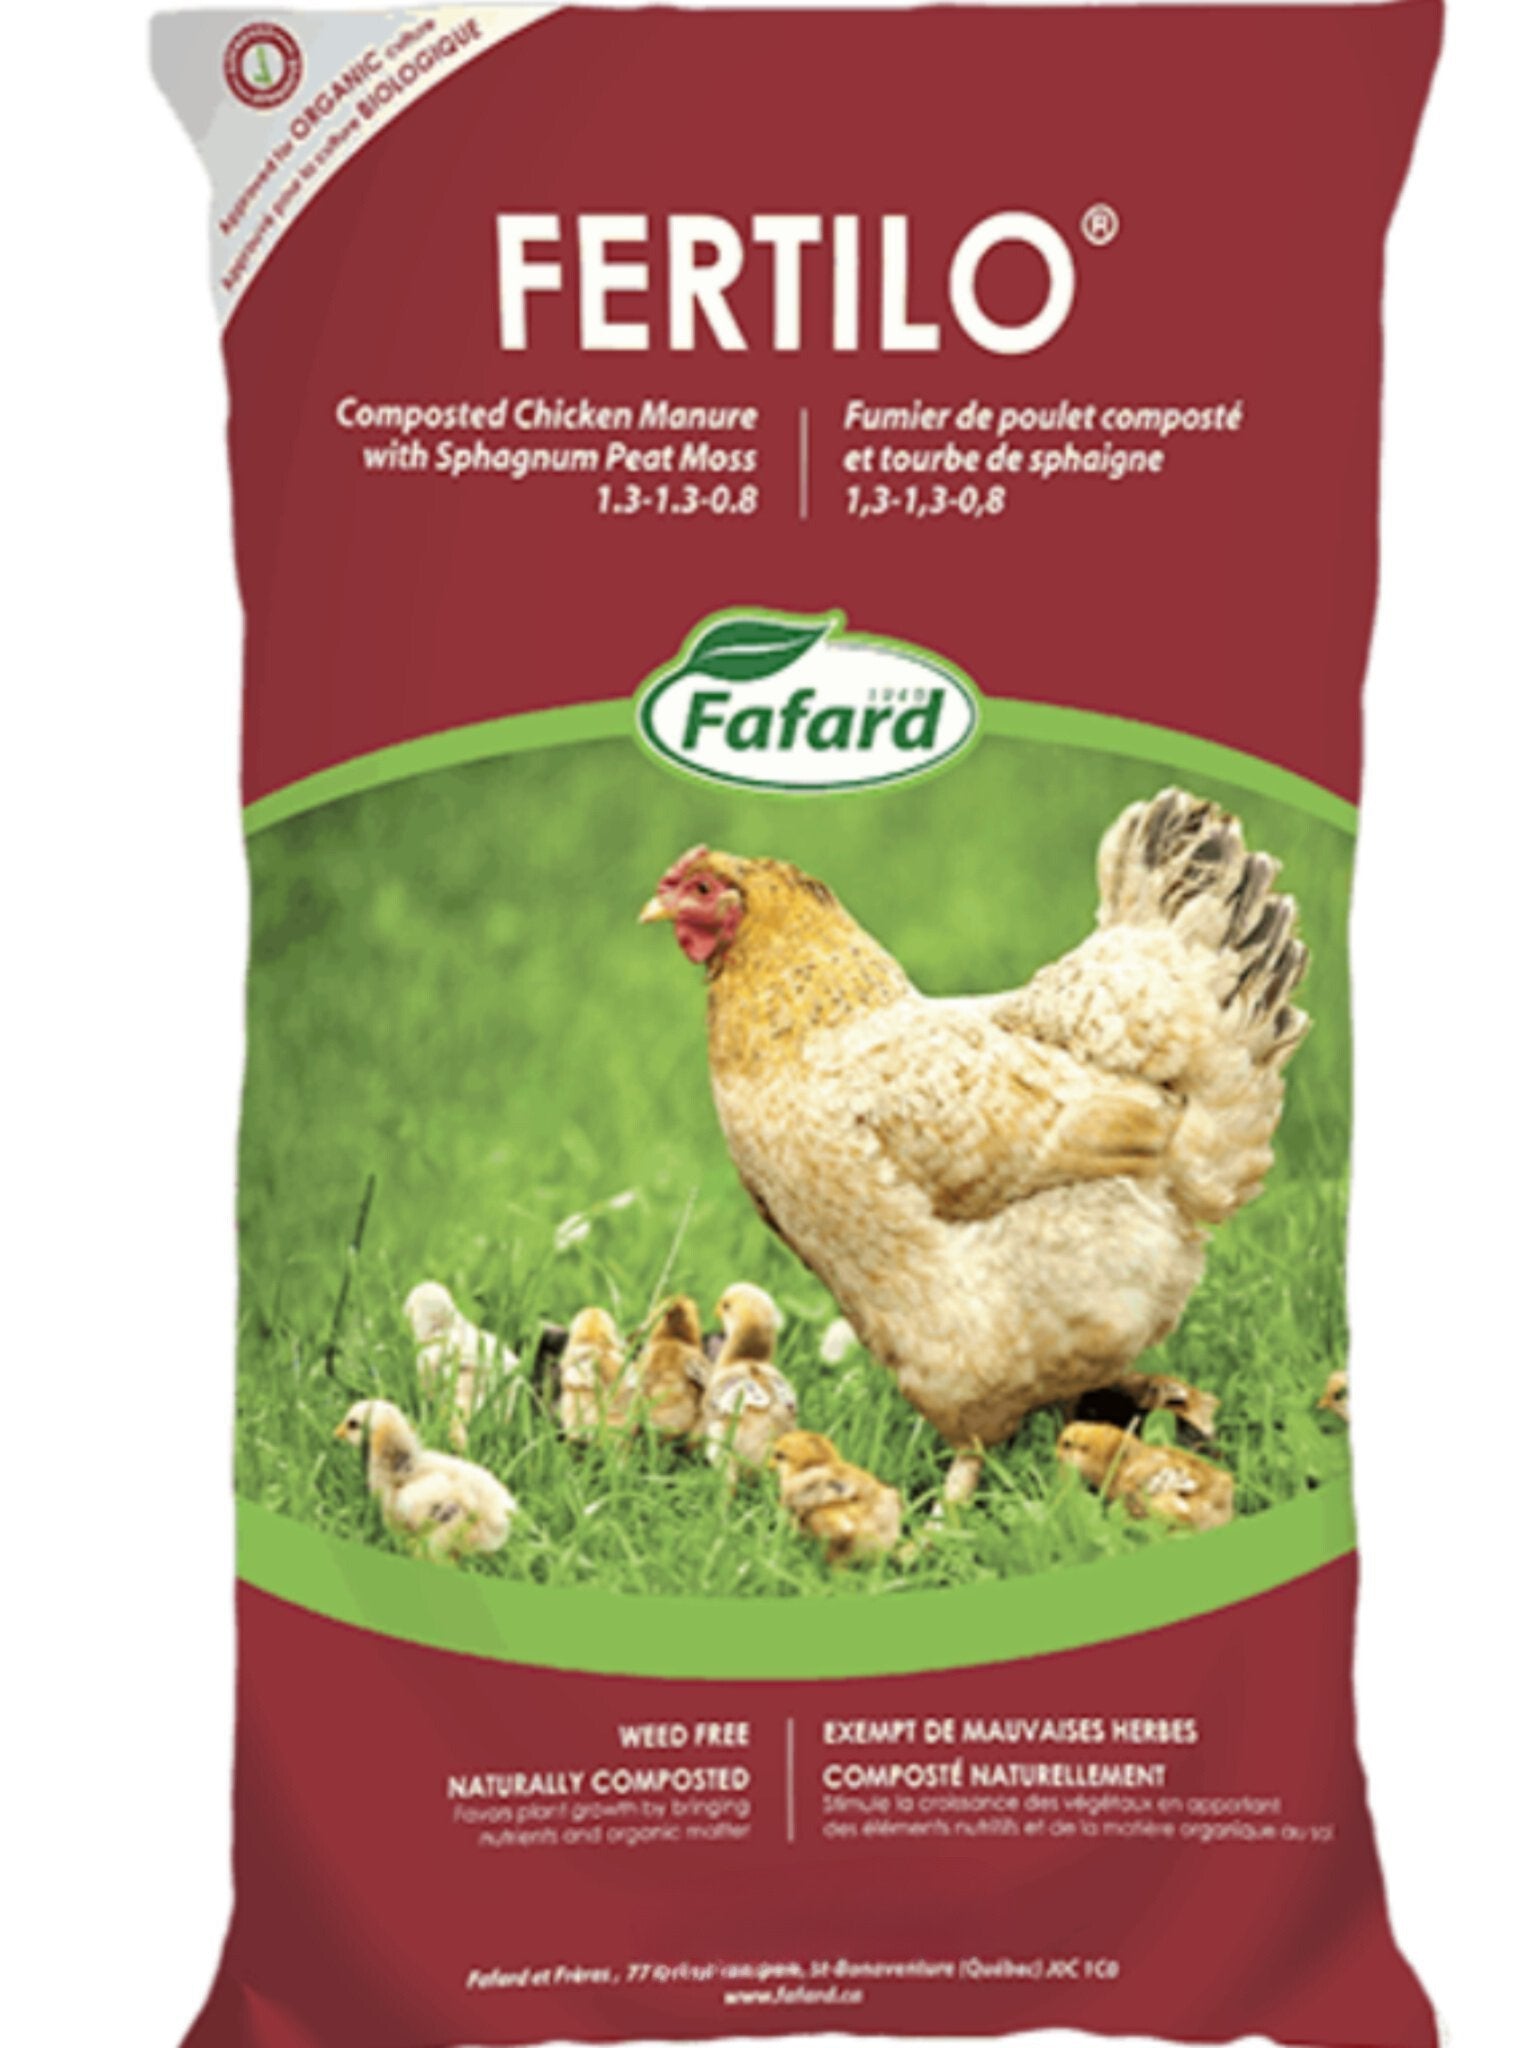 Fafard Fertilo Composted Chicken Manure 25 L - Satellite Garden Centre